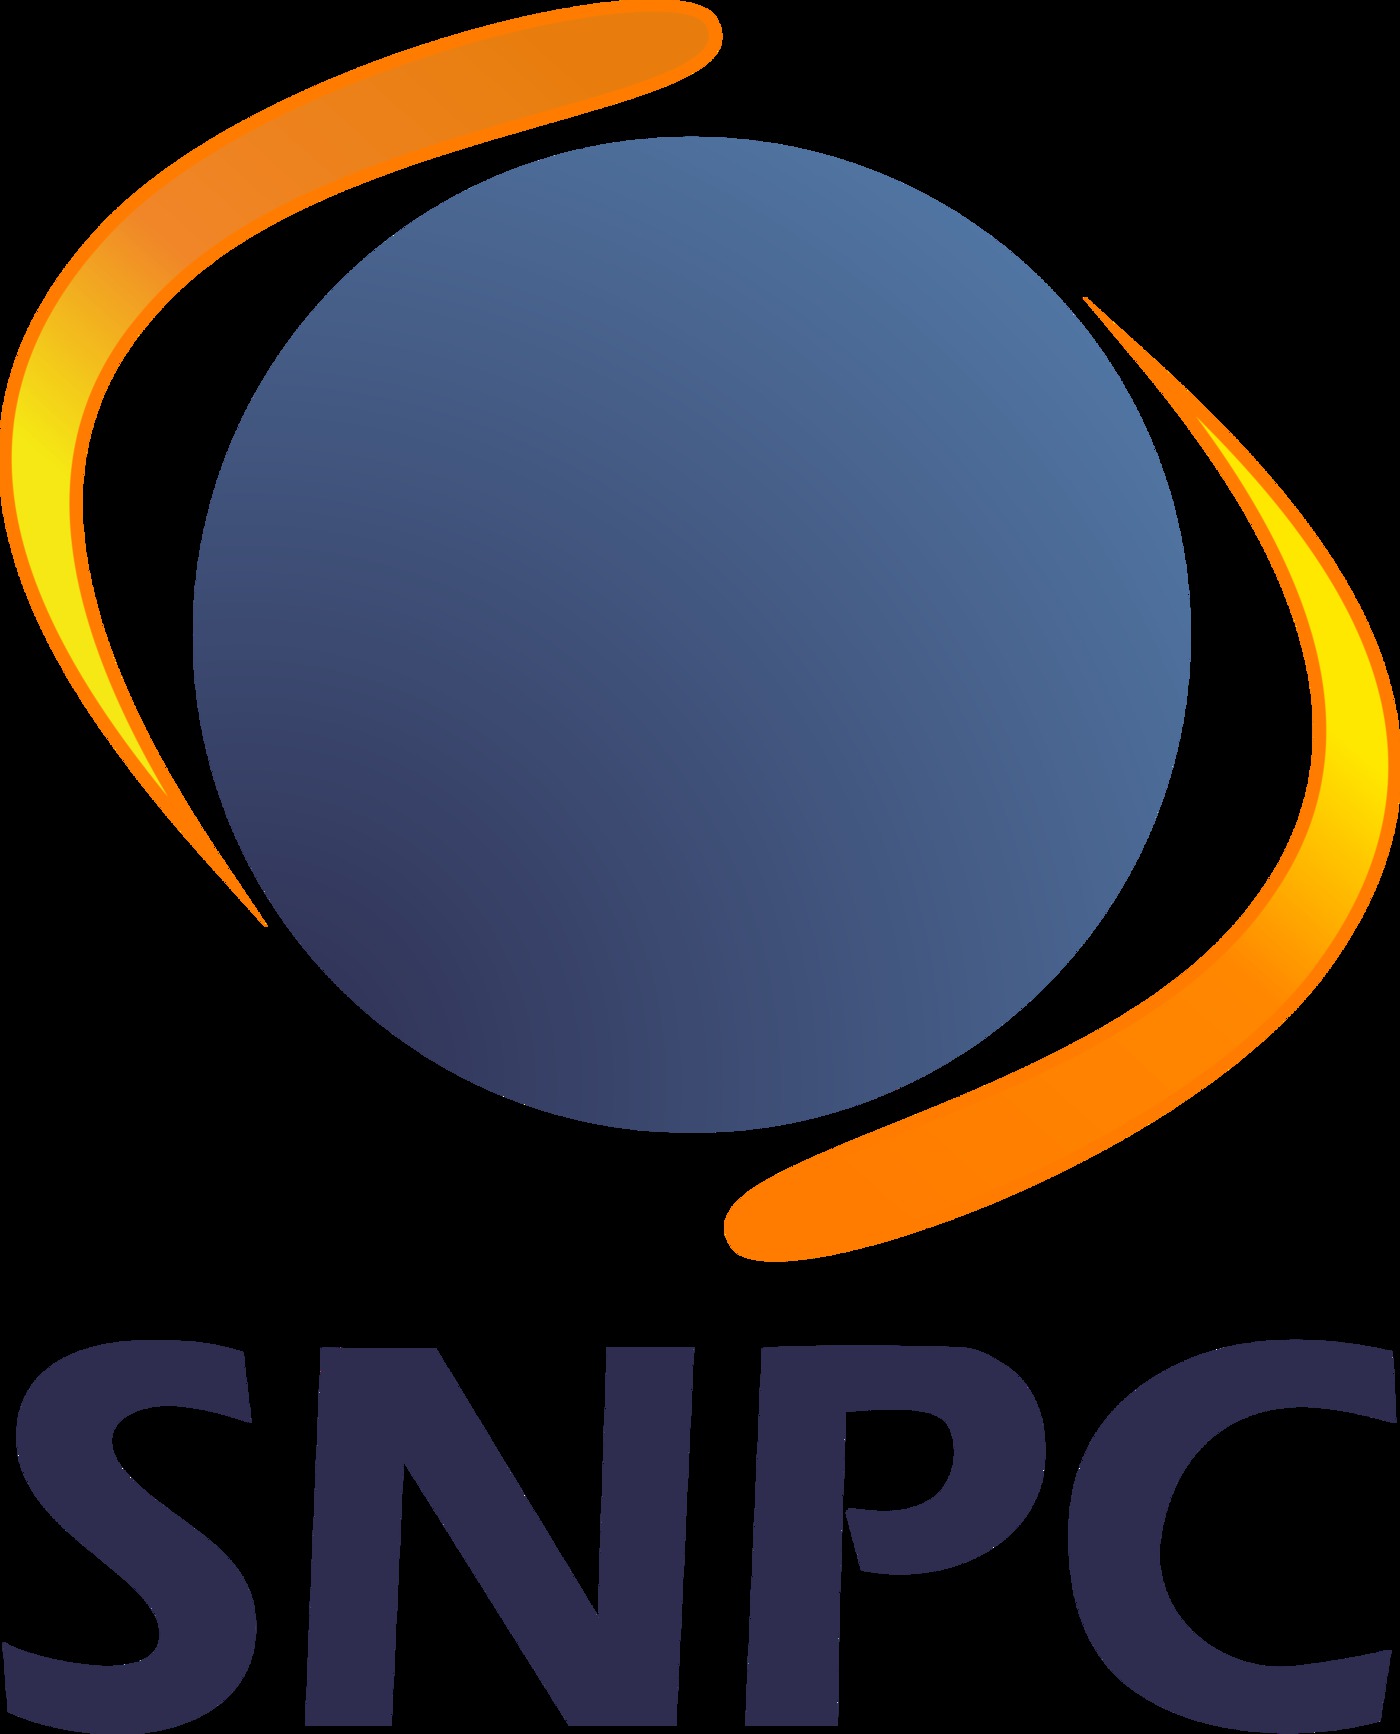 (c) Snpc-group.com